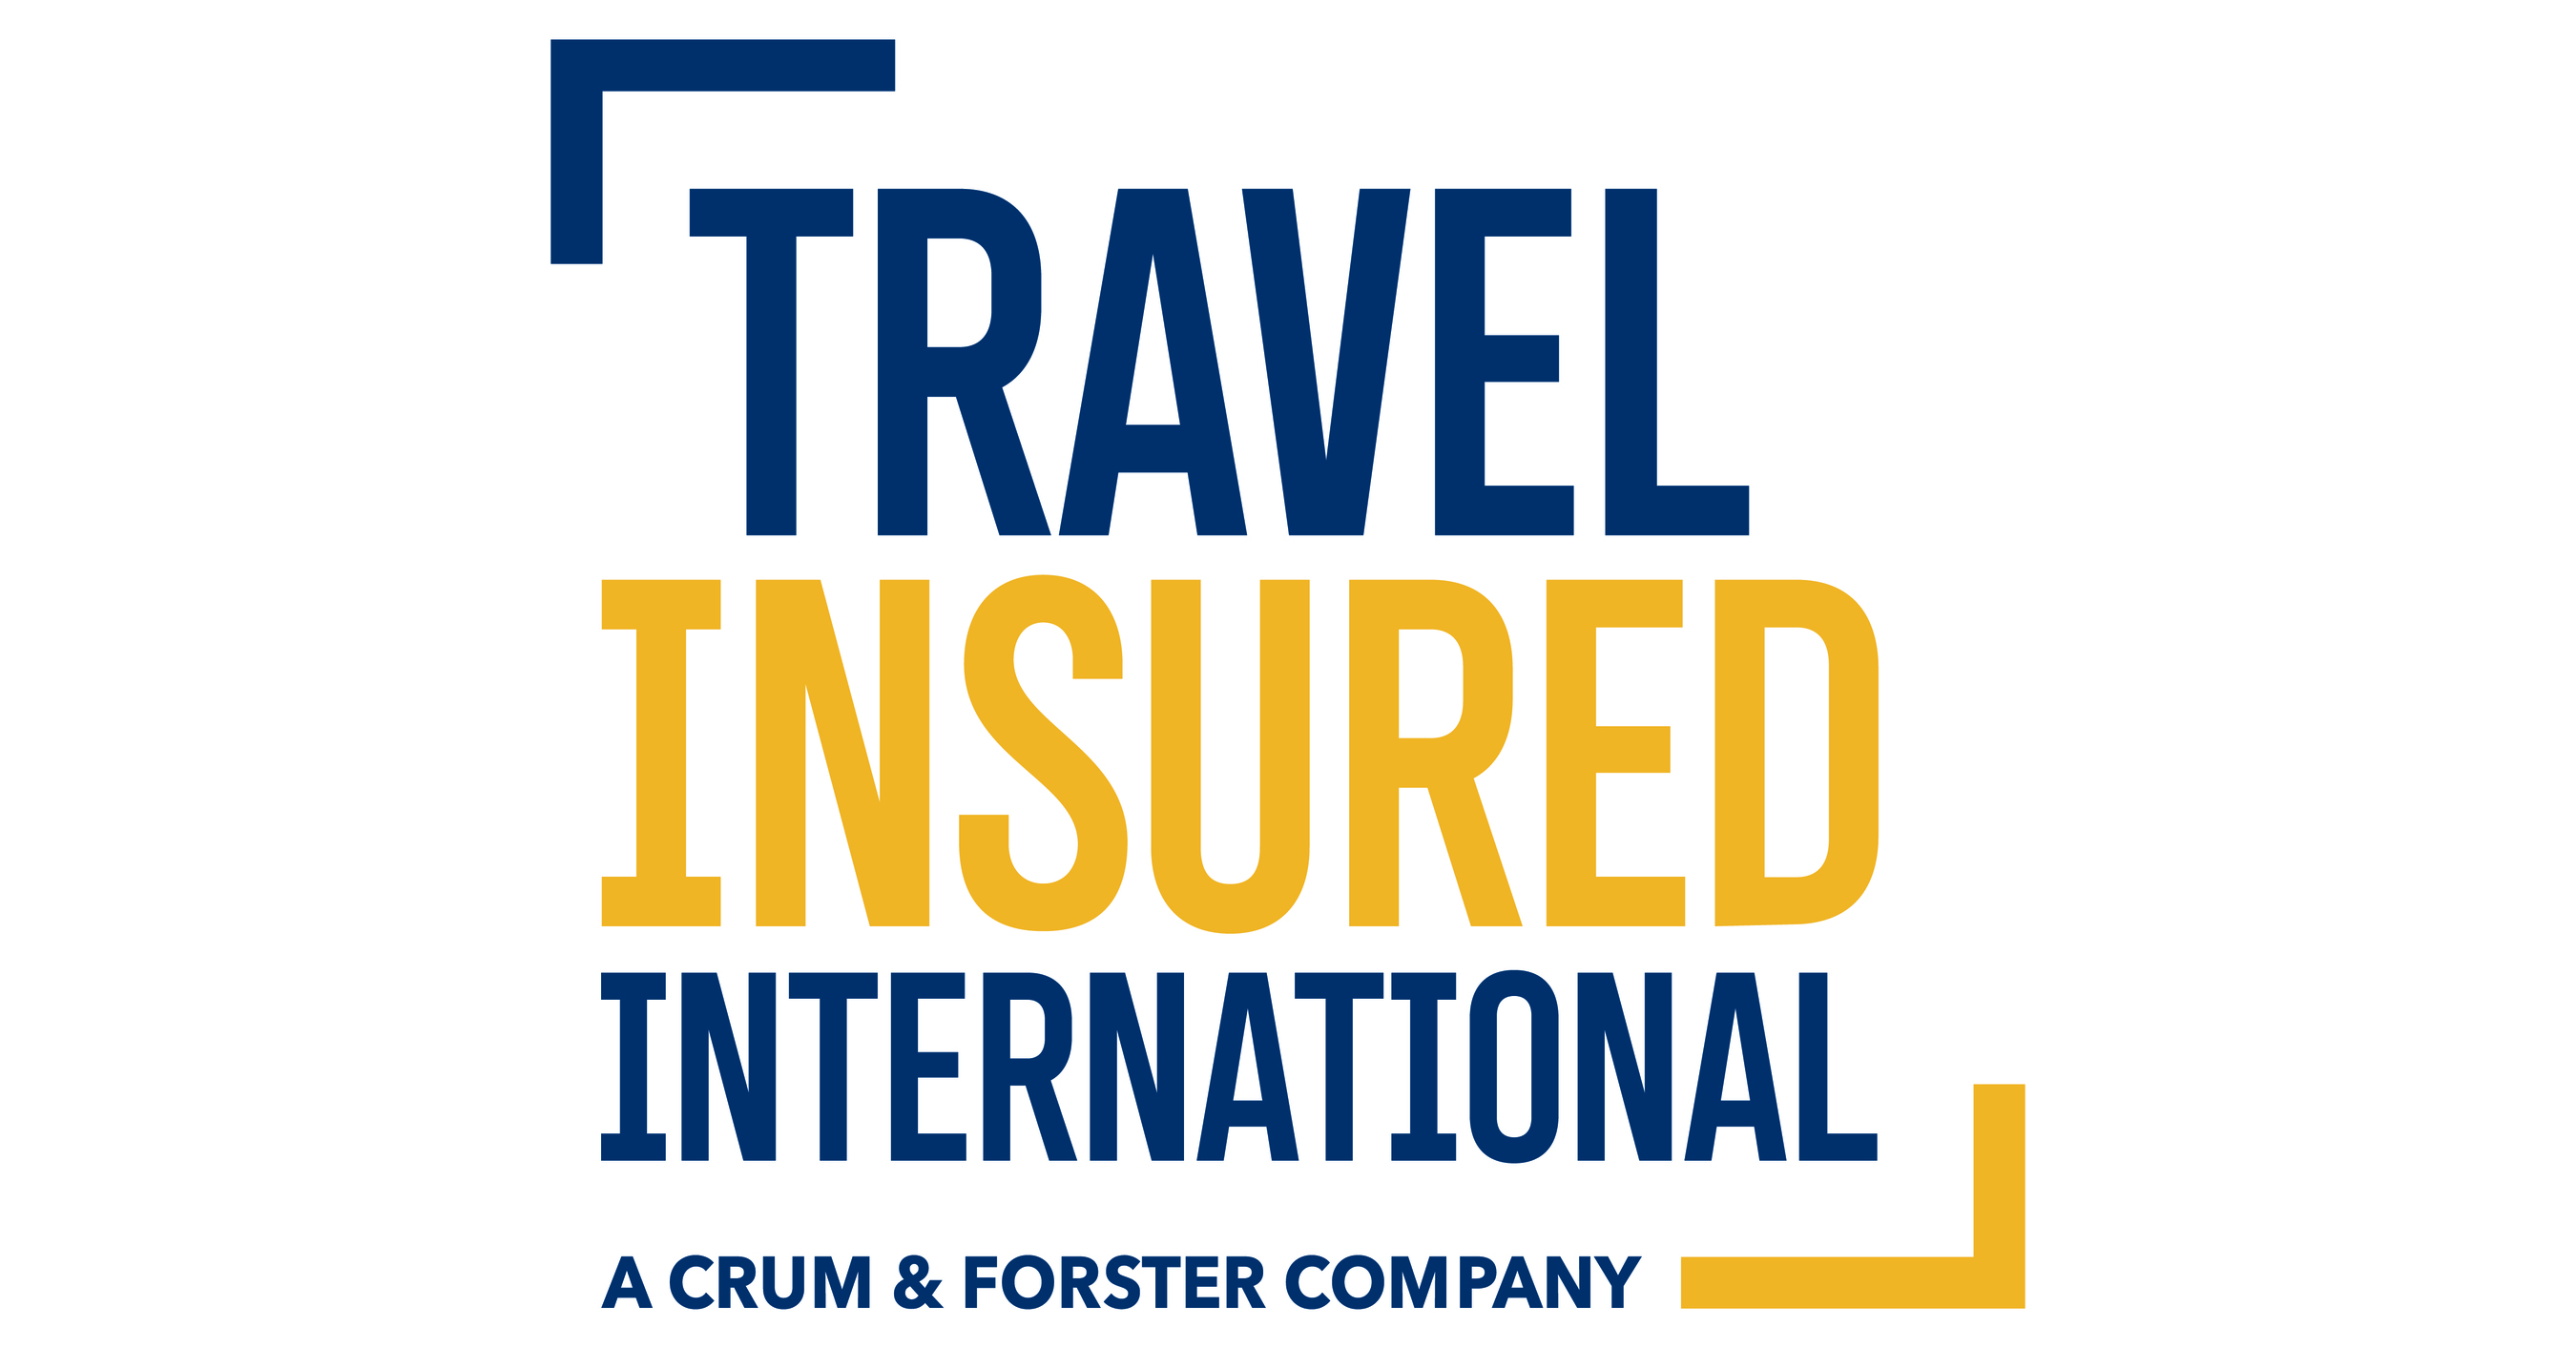 worldwide trip protector travel insured international